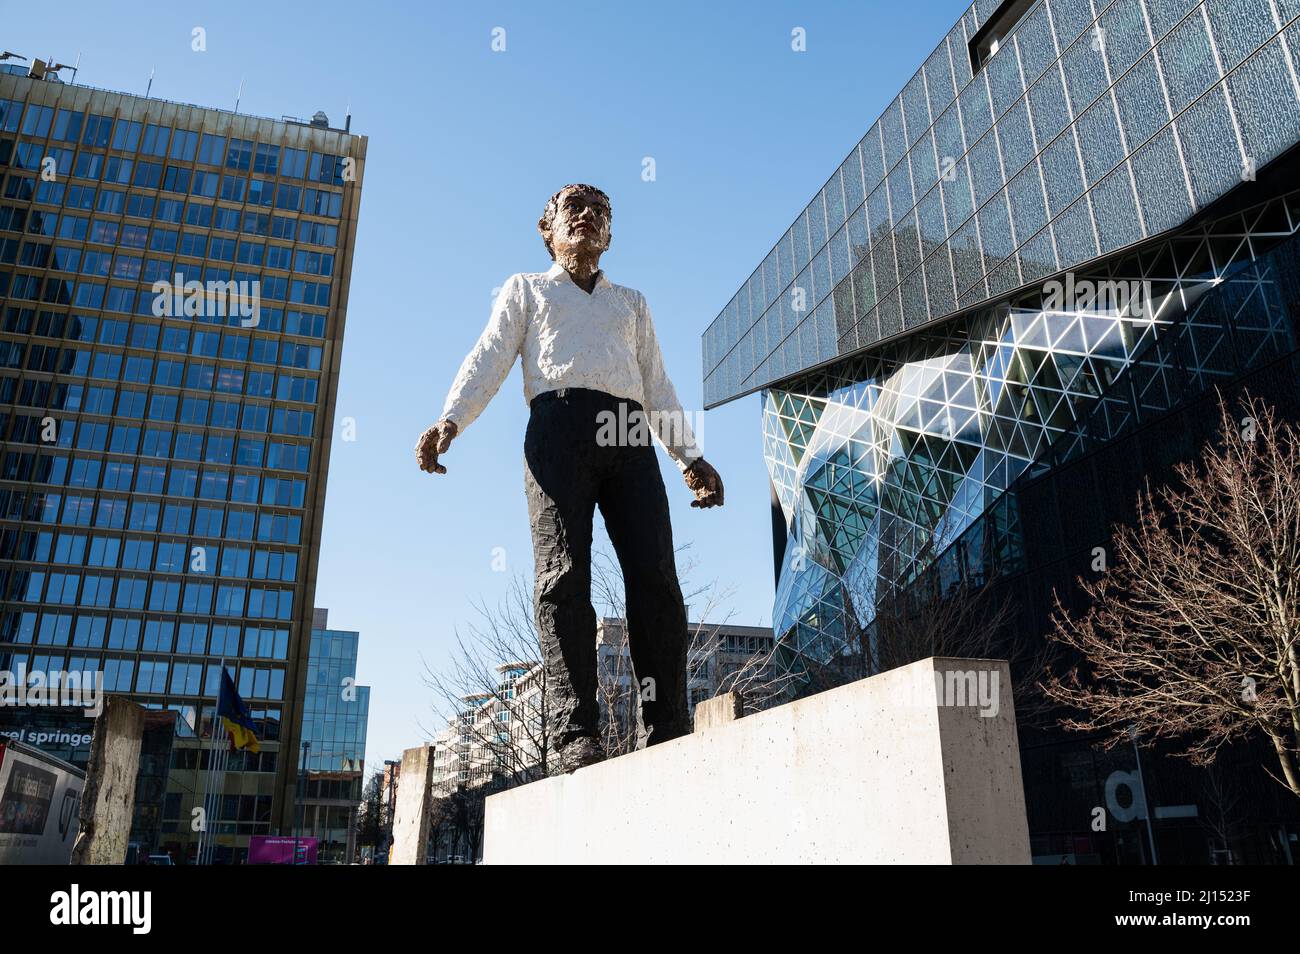 12.03.2022, Berlino, Germania, Europa - scultura 'Balanceakt' (Balancing Act), opera dello scultore tedesco Stephan Balkenhol presso l'edificio Axel Springer. Foto Stock